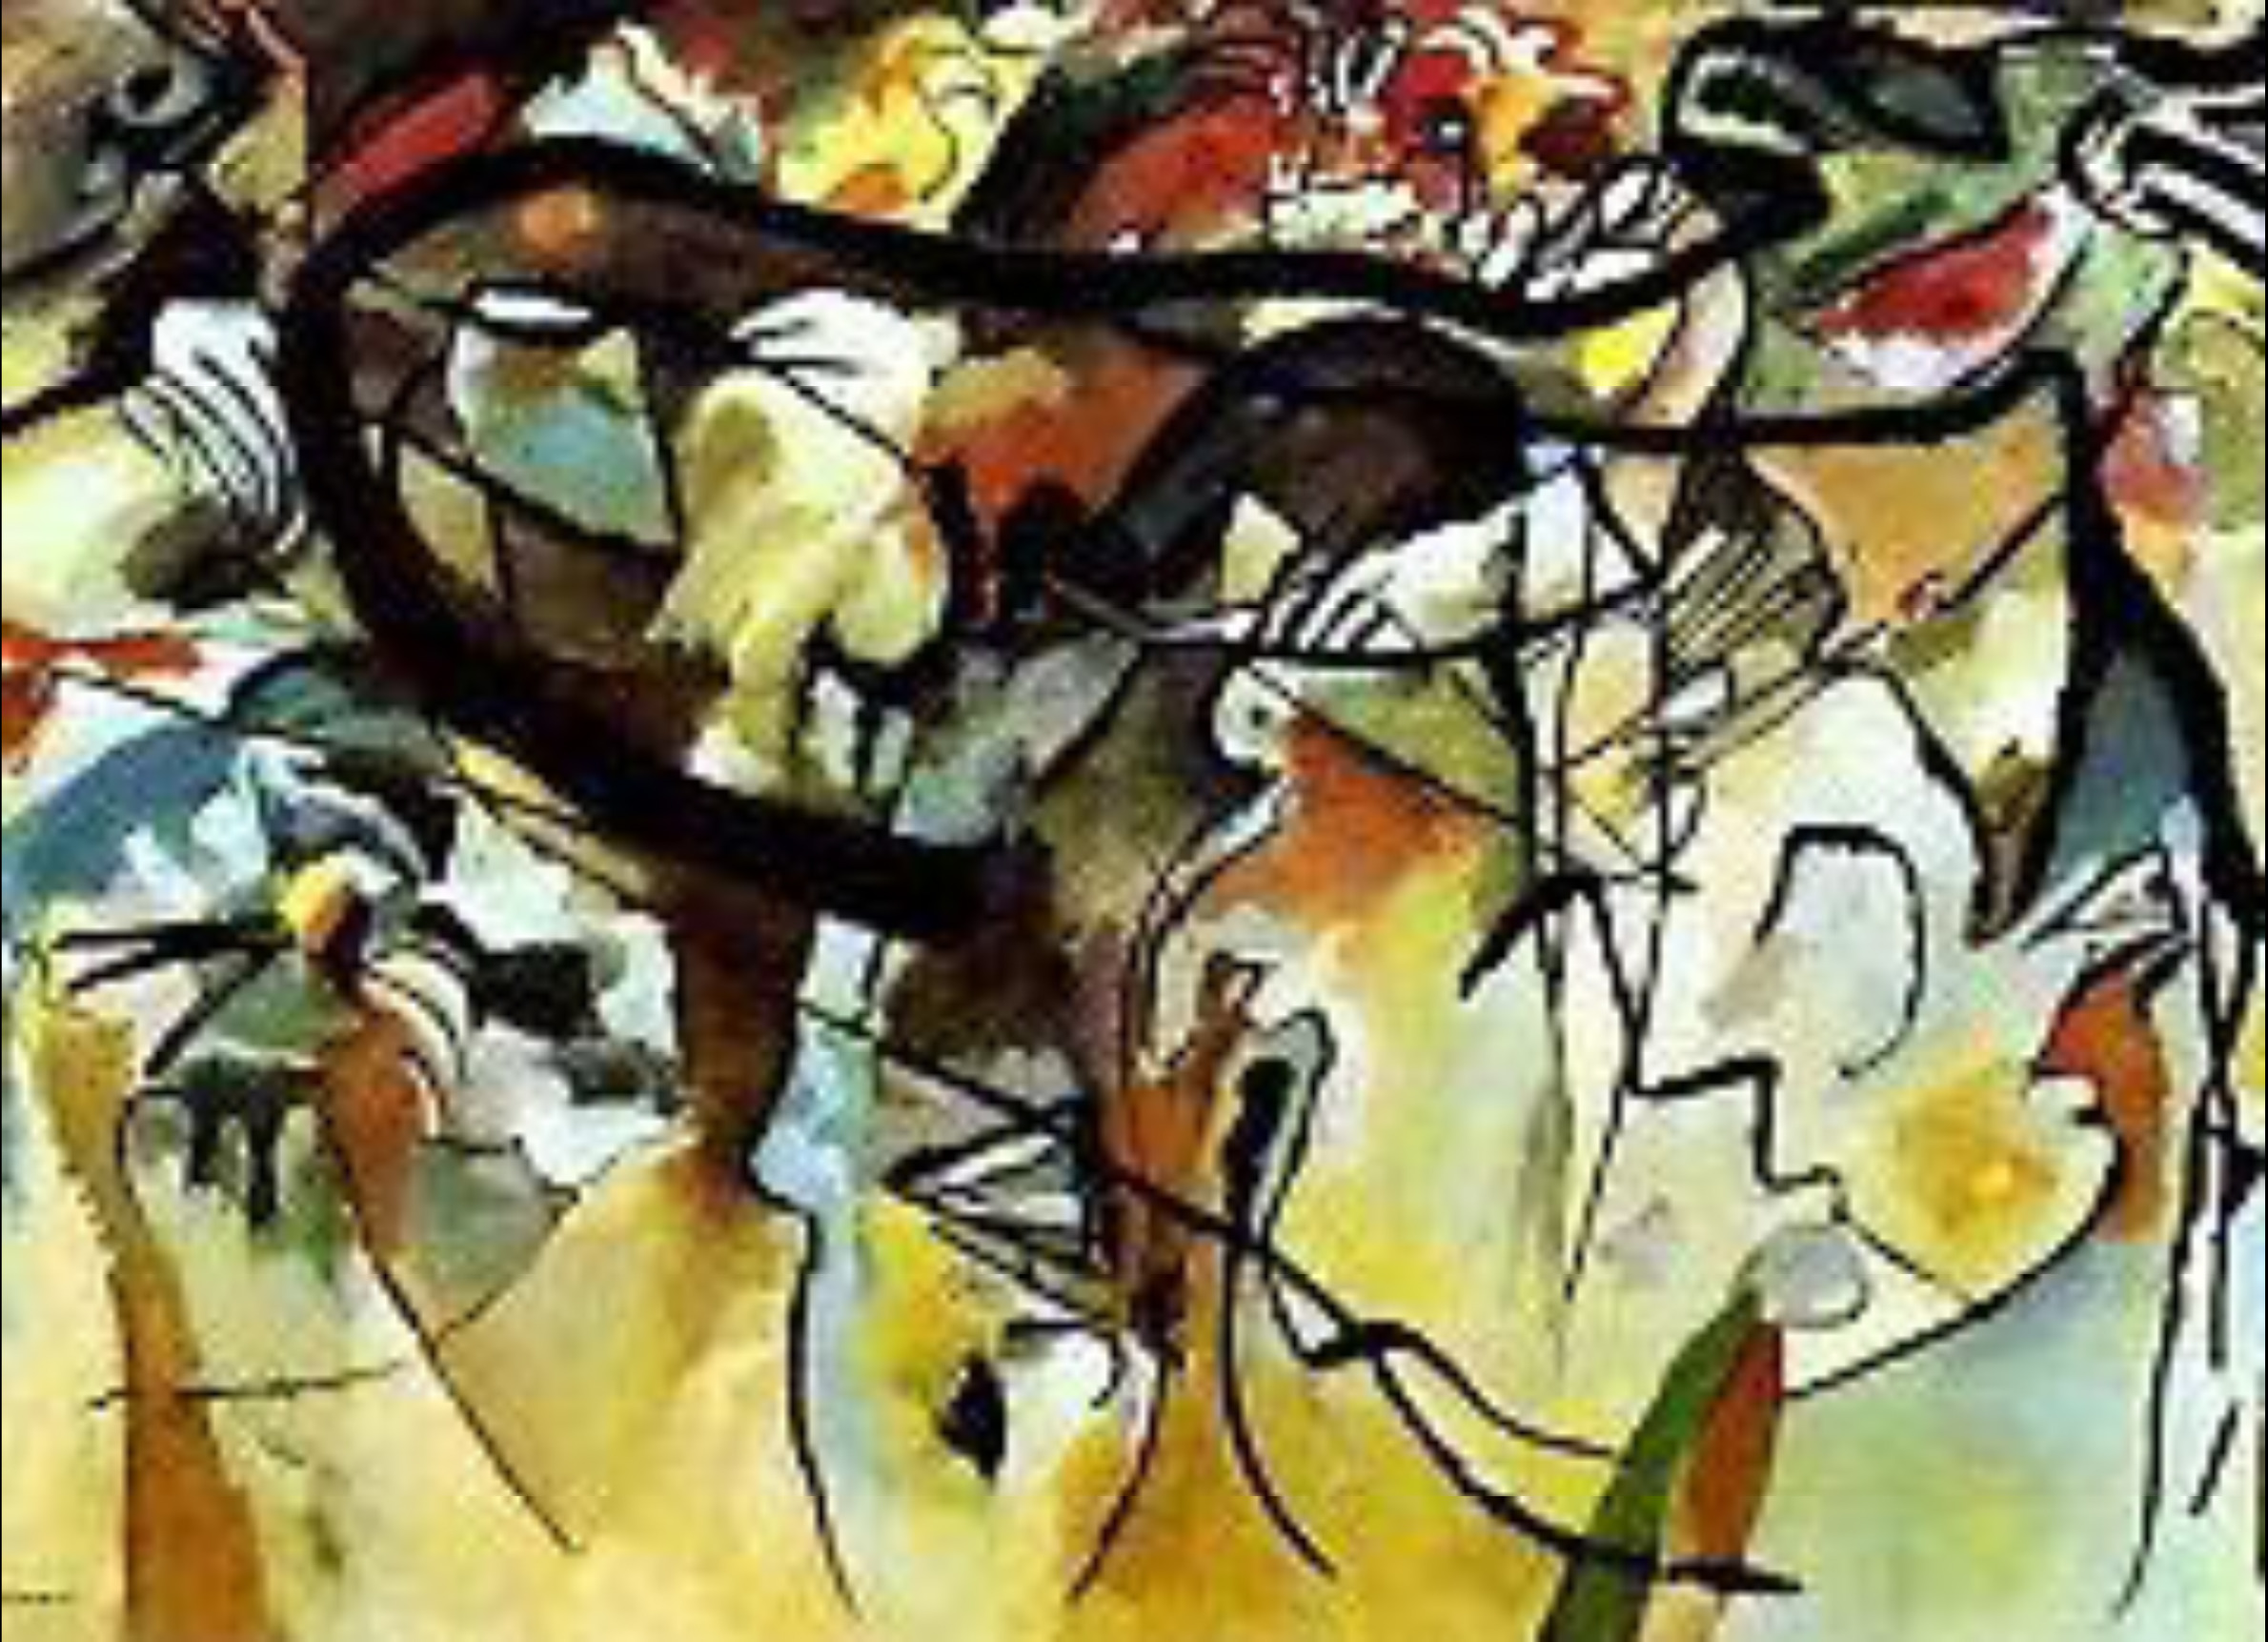 Vasily Kandinsky – Composition V (1911)